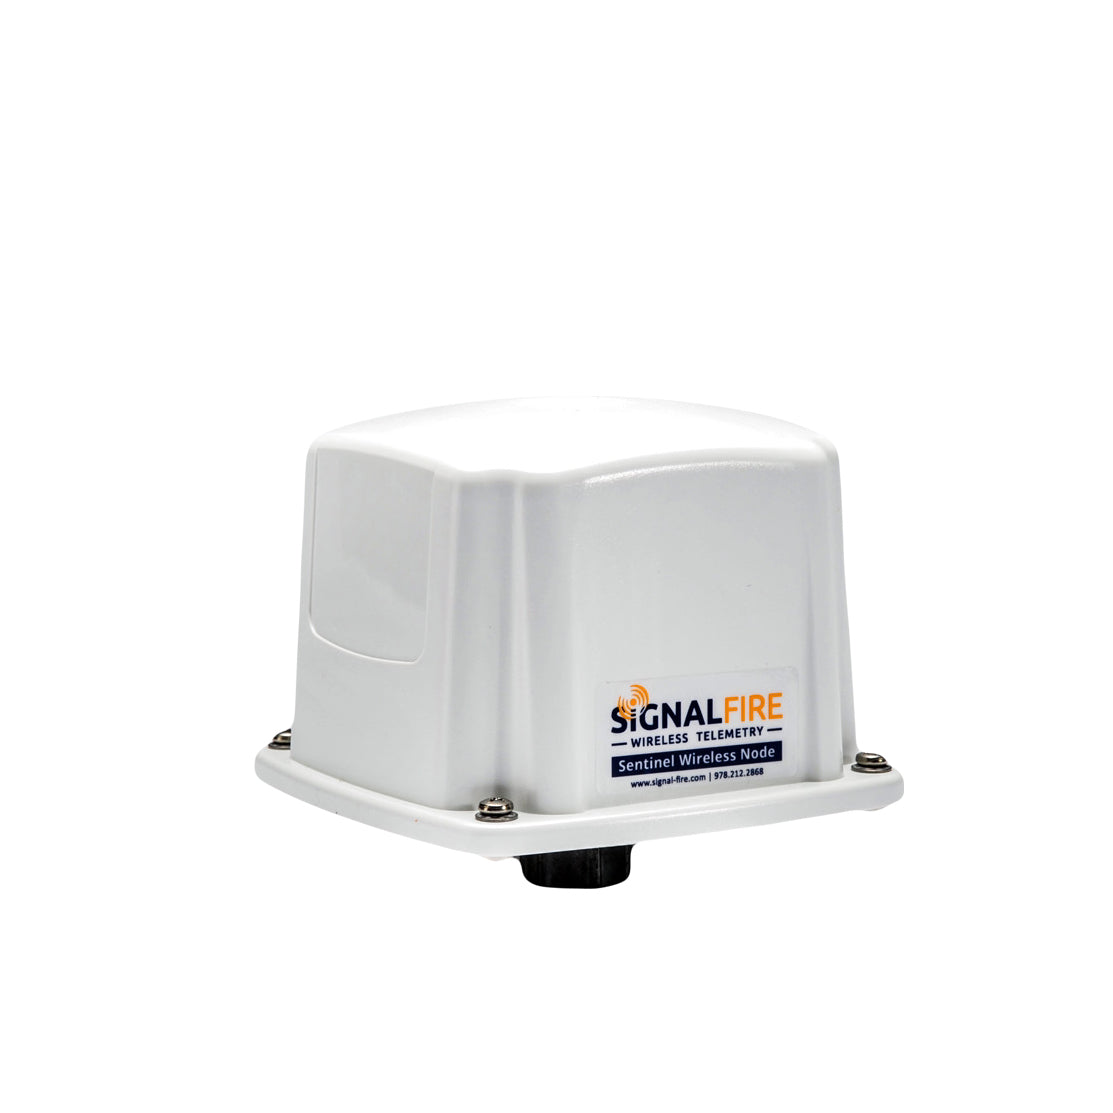 SignalFire 900 MHz Wireless Products